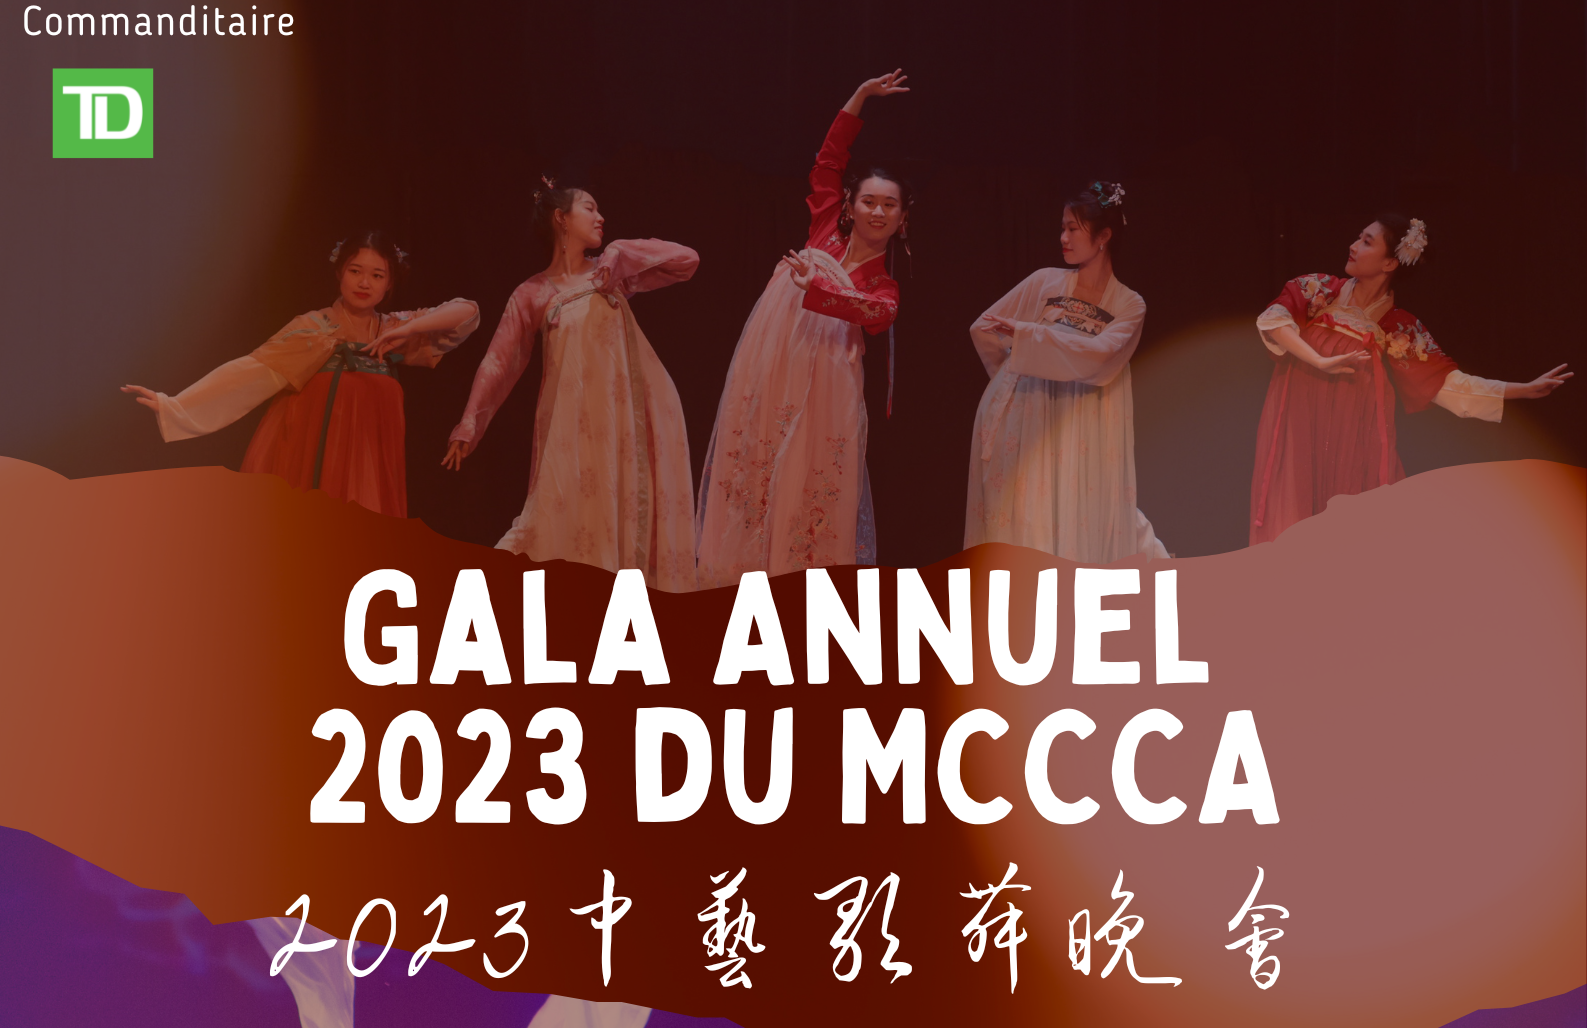 Gala Annuel 2023 du MCCCA